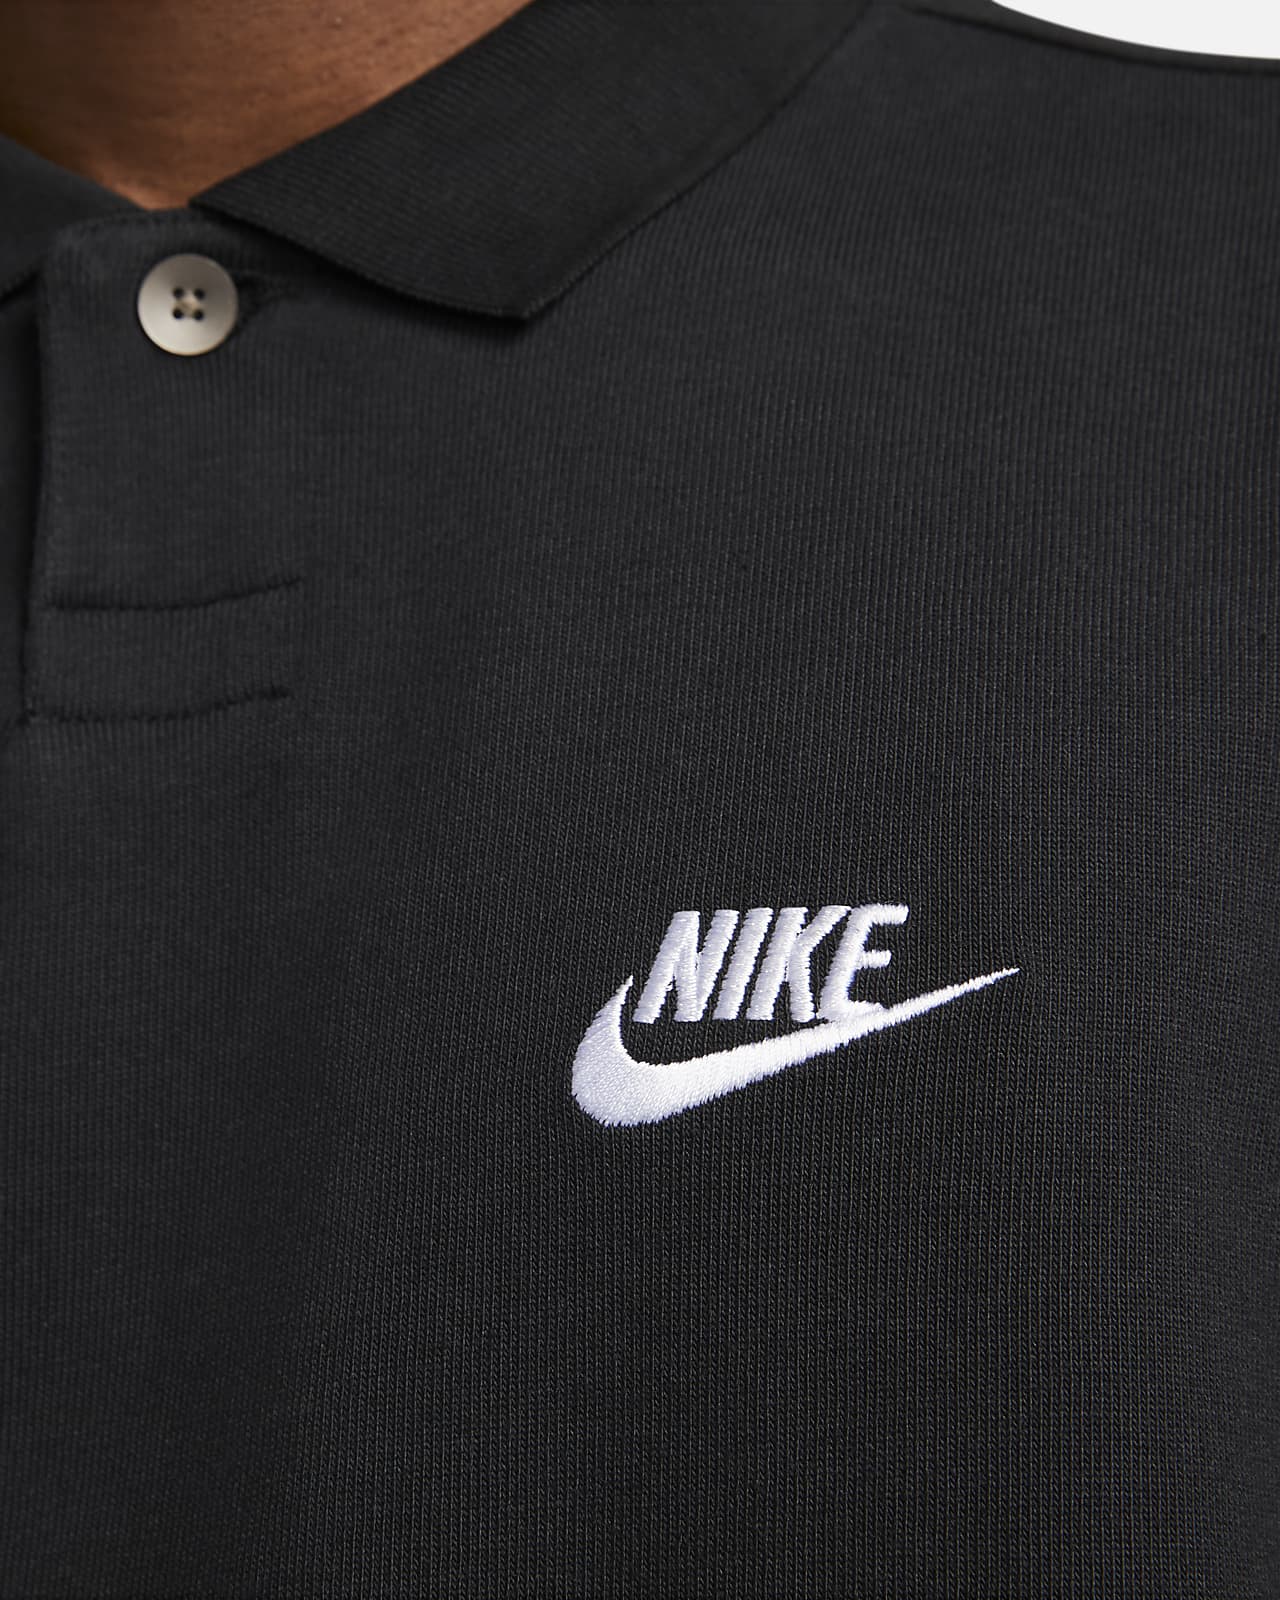 Polo Nike® avec logo vêtement promotionnel